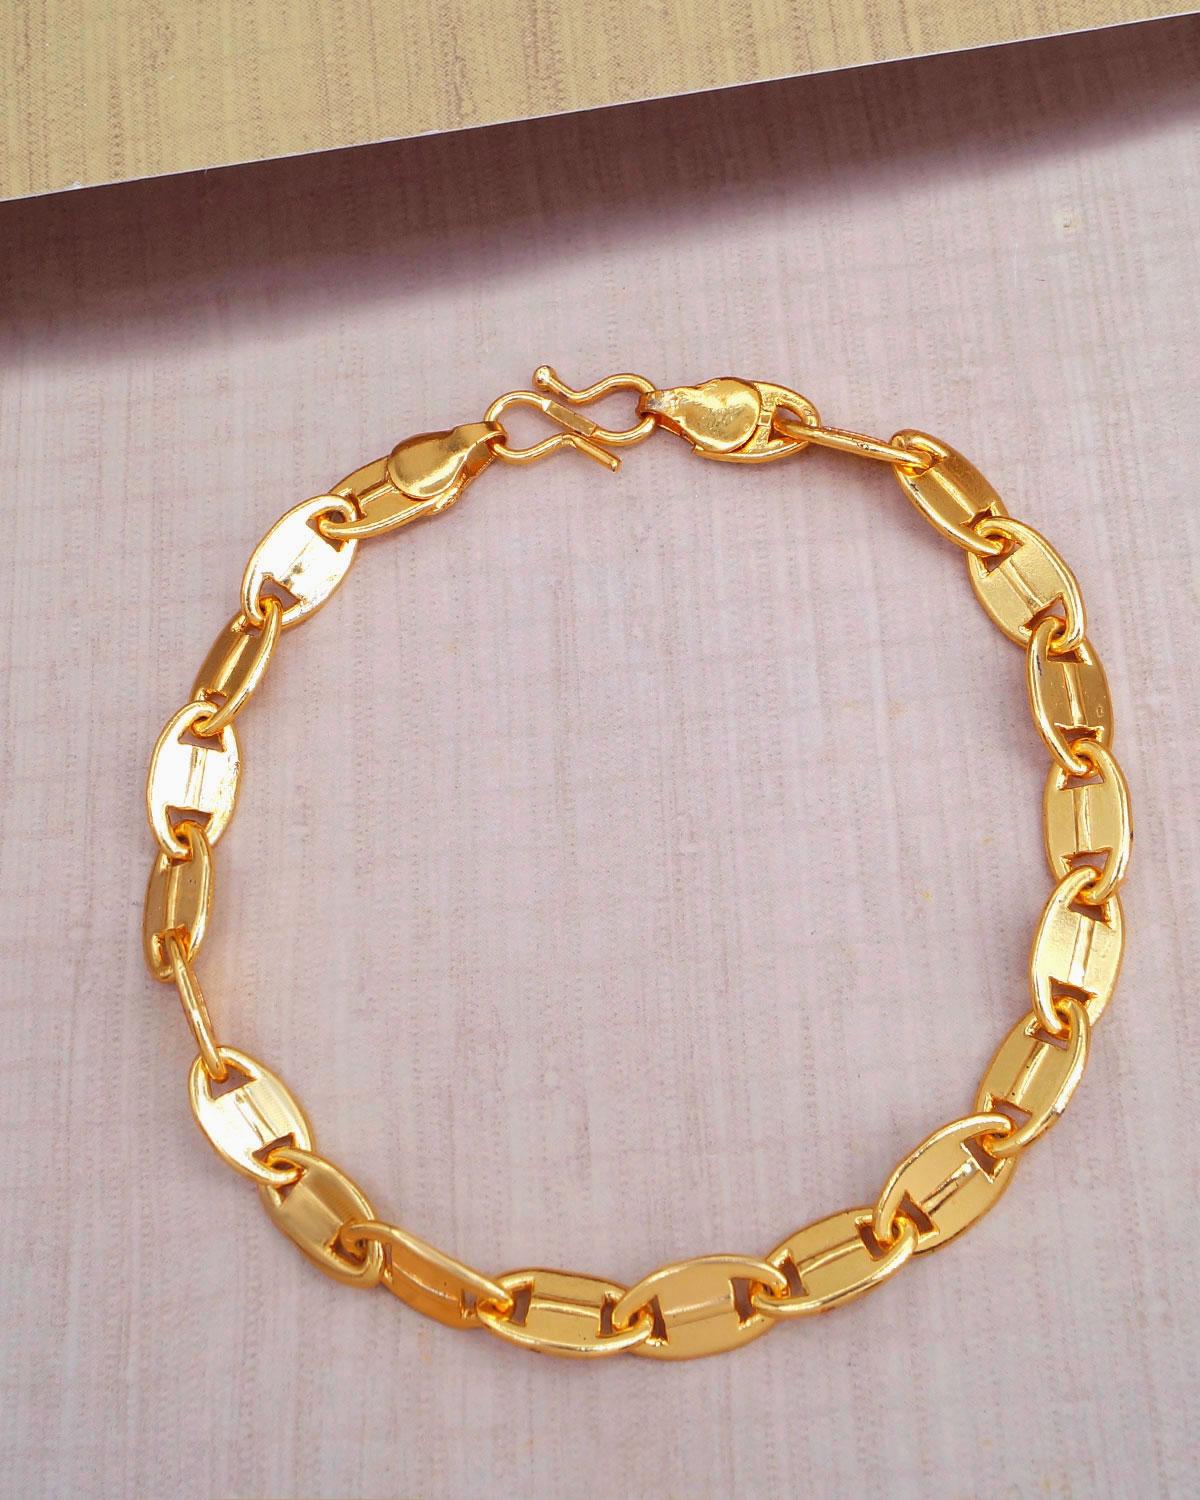 Latest in Trends Men's Voguish Bracelet Link Type Chain Bracelet